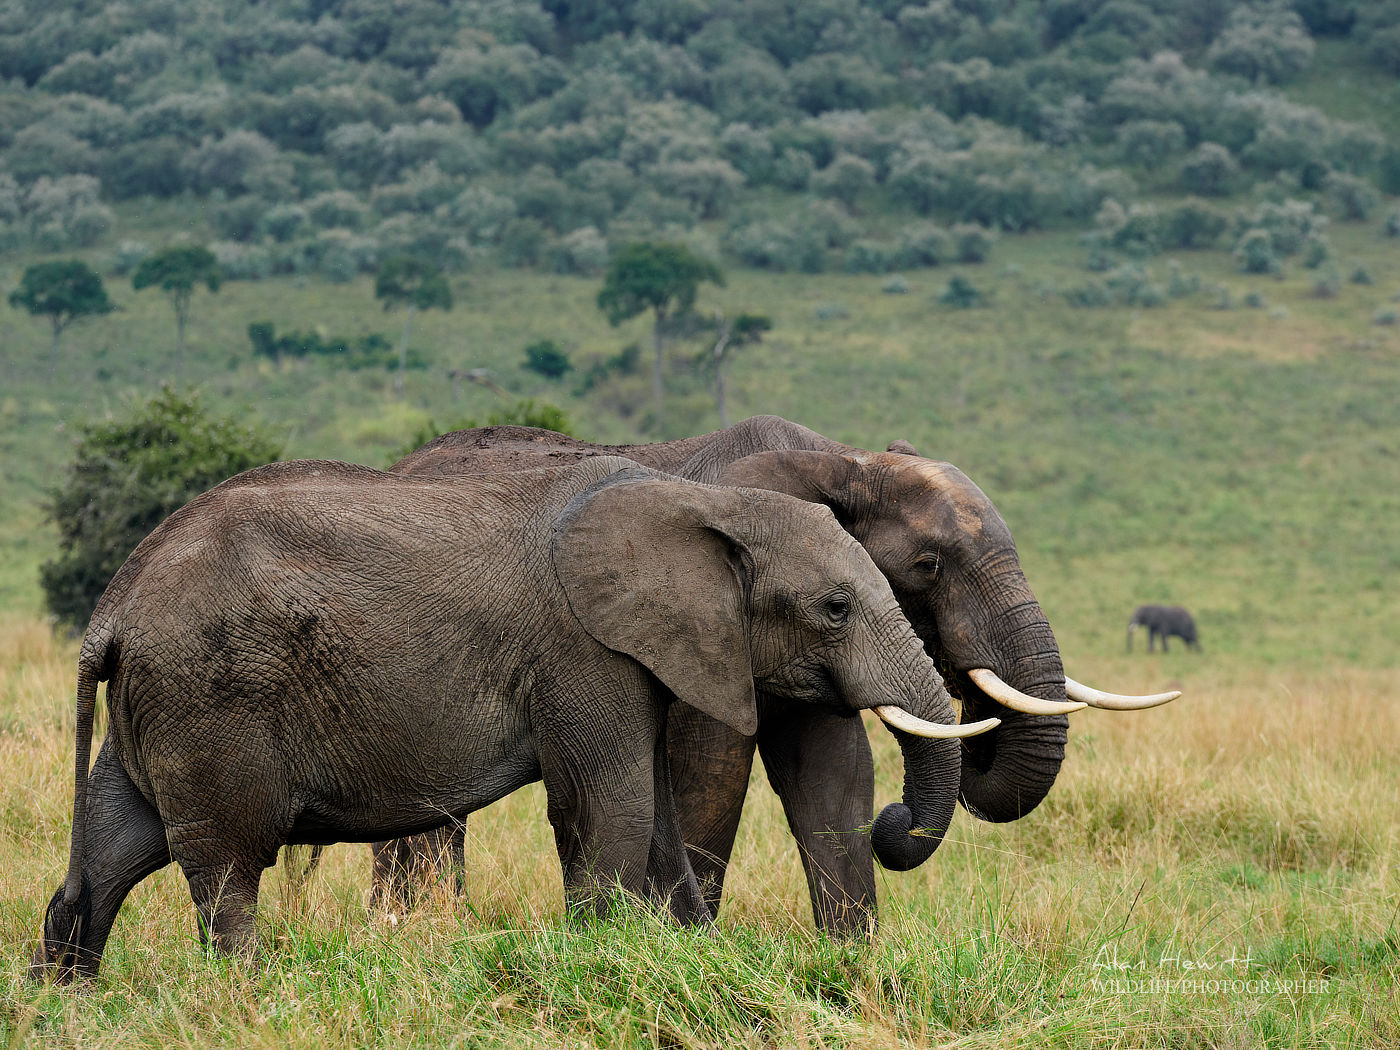 Elephants, Fujifilm GFX100S - © Alan Hewitt Photography